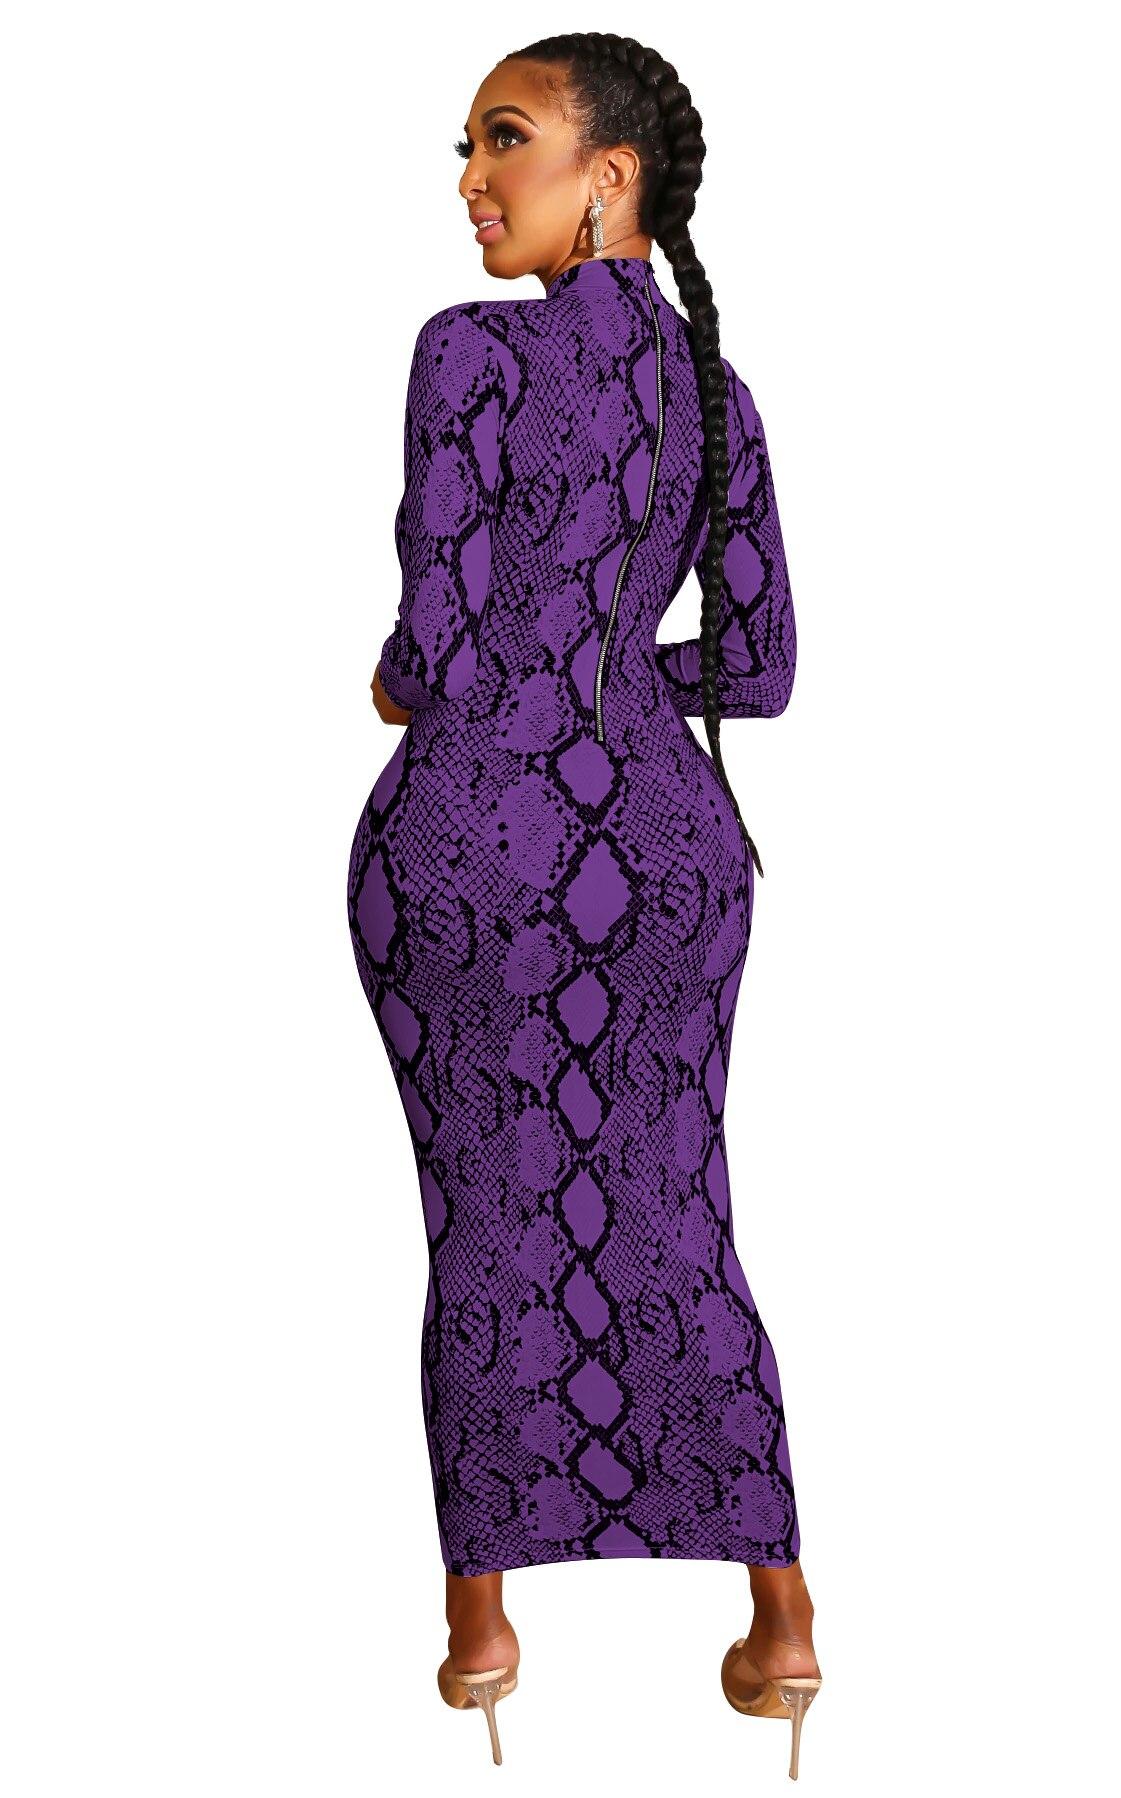 Women SnakeSkin Dress Sexy Print Womens Snake Skin sheath Long Sleeve Zipper Deep V Midi Bodycon Elegant Party Dress